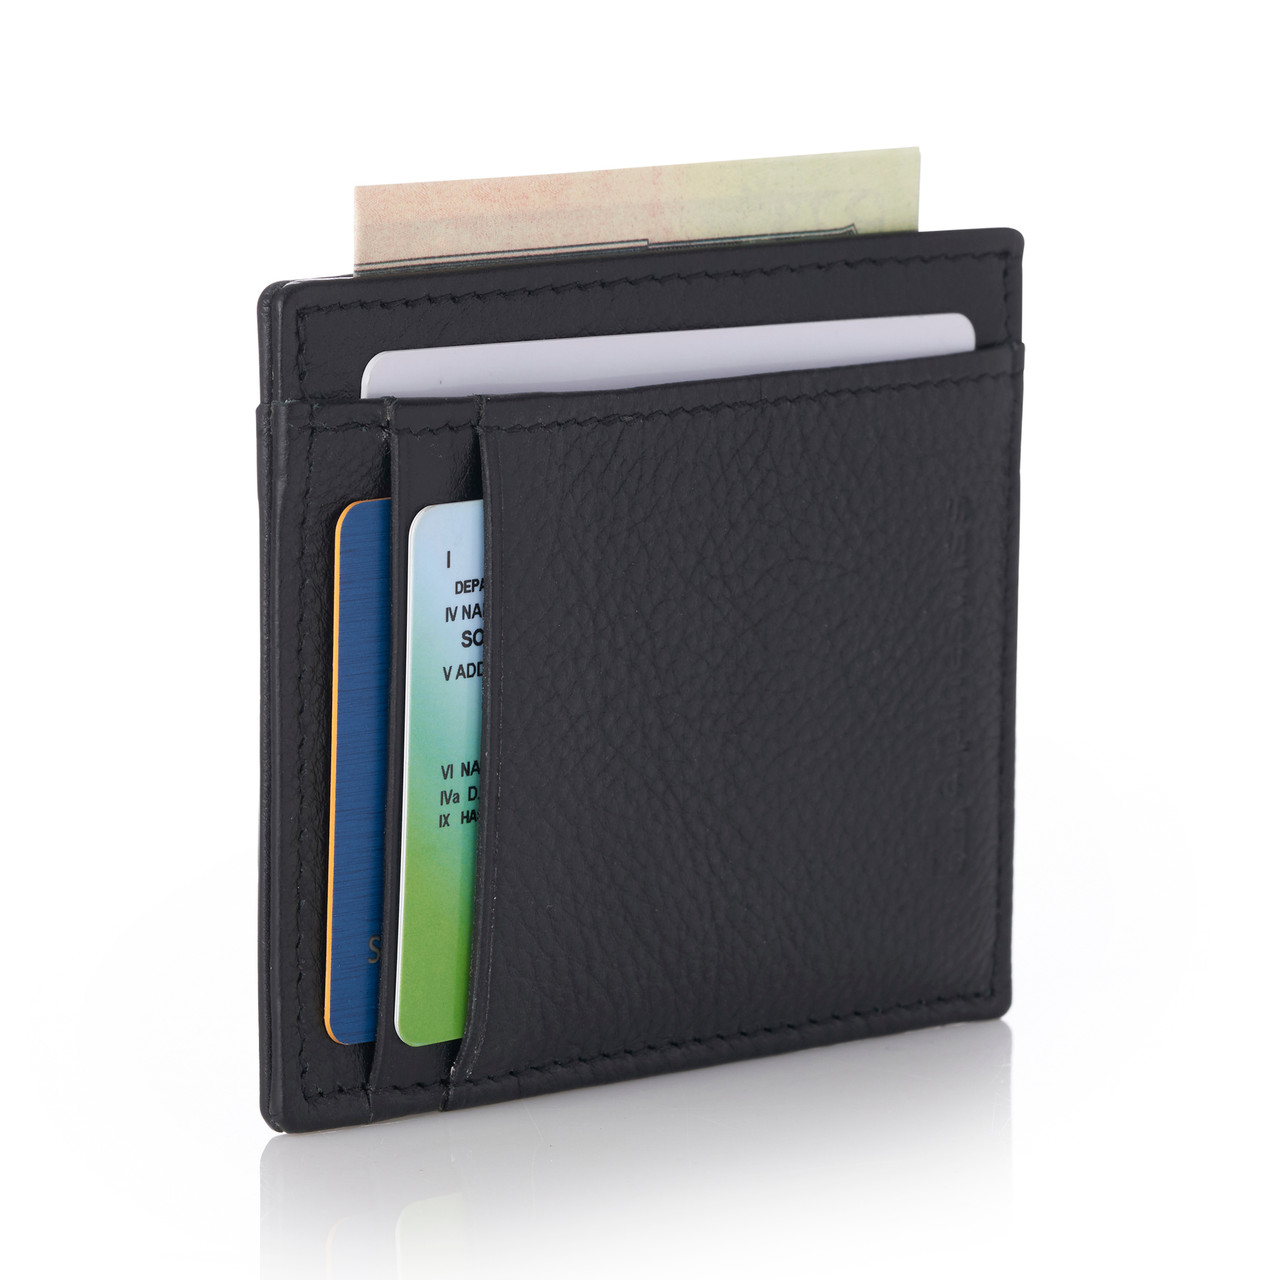 Alpine Swiss Men's RFID Front Pocket Wallet